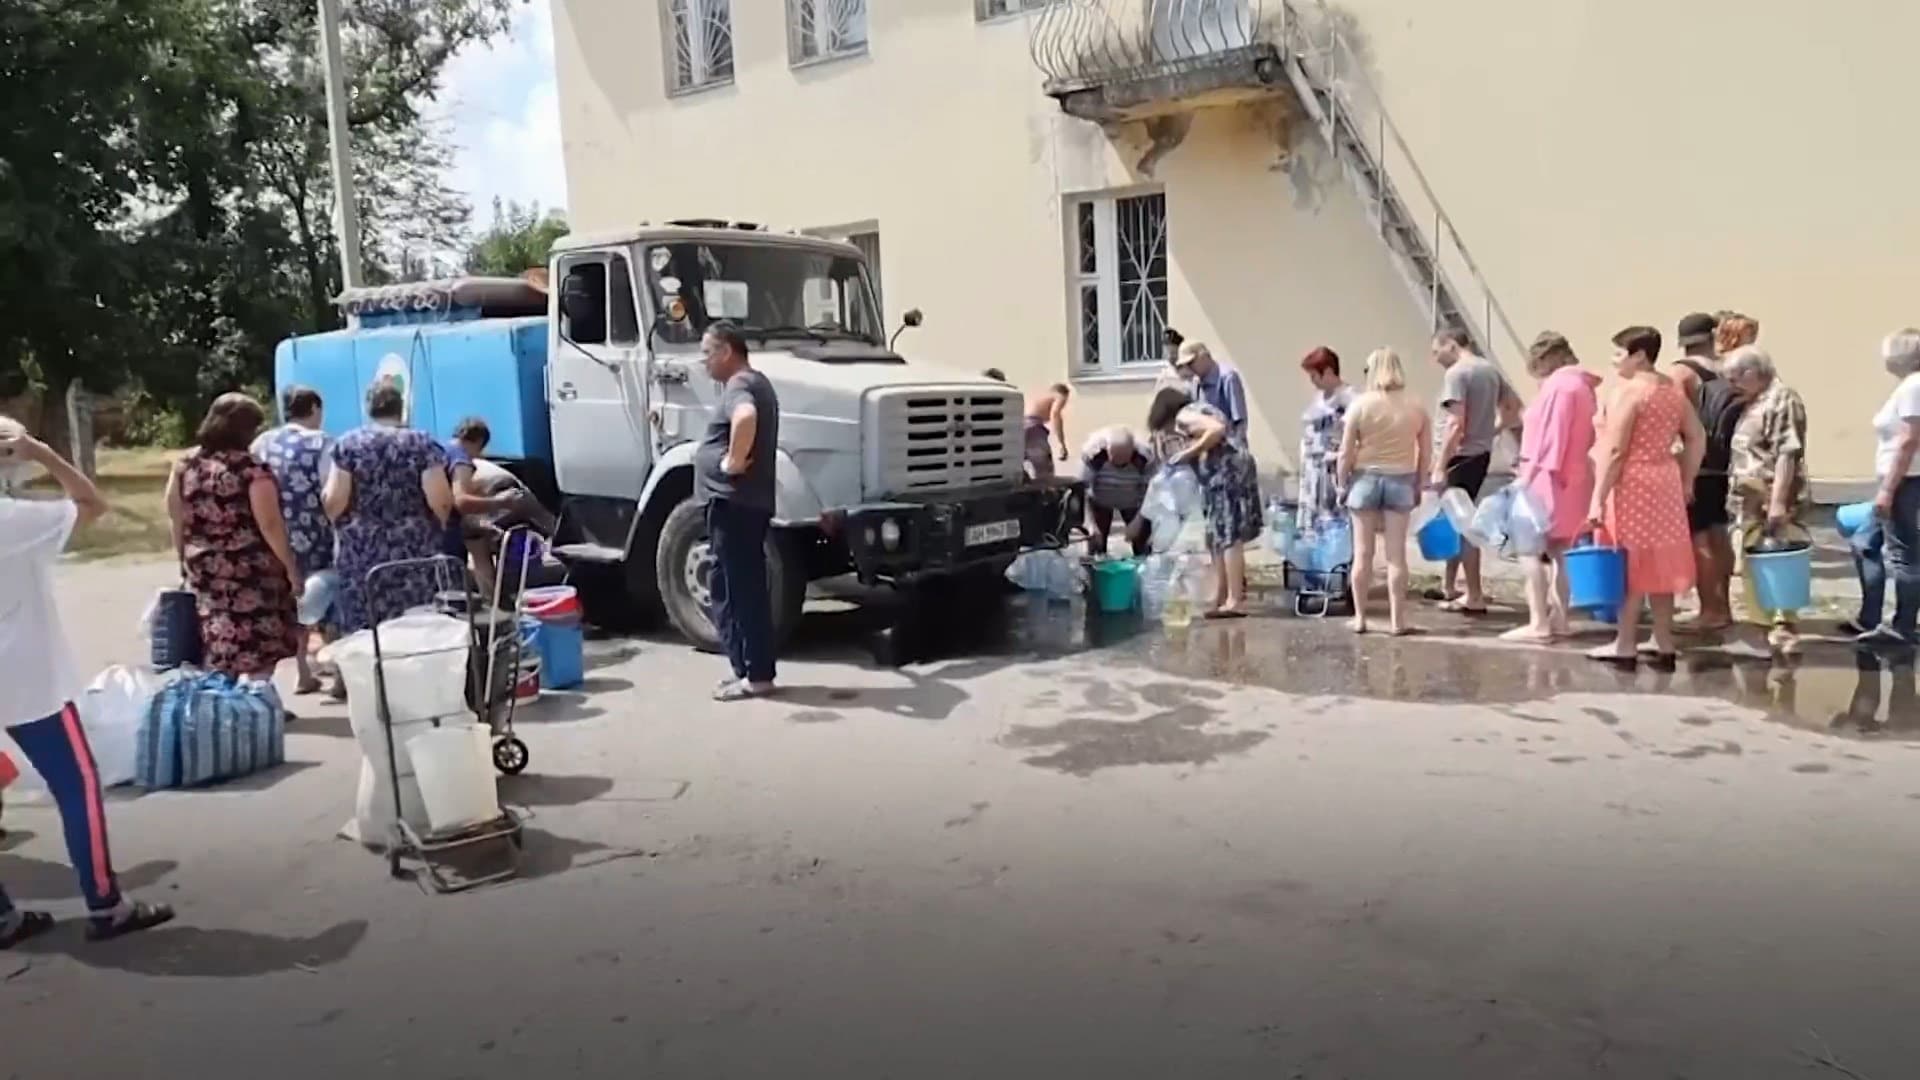 ukrainian city of Druzhkivka has almost no drinking water